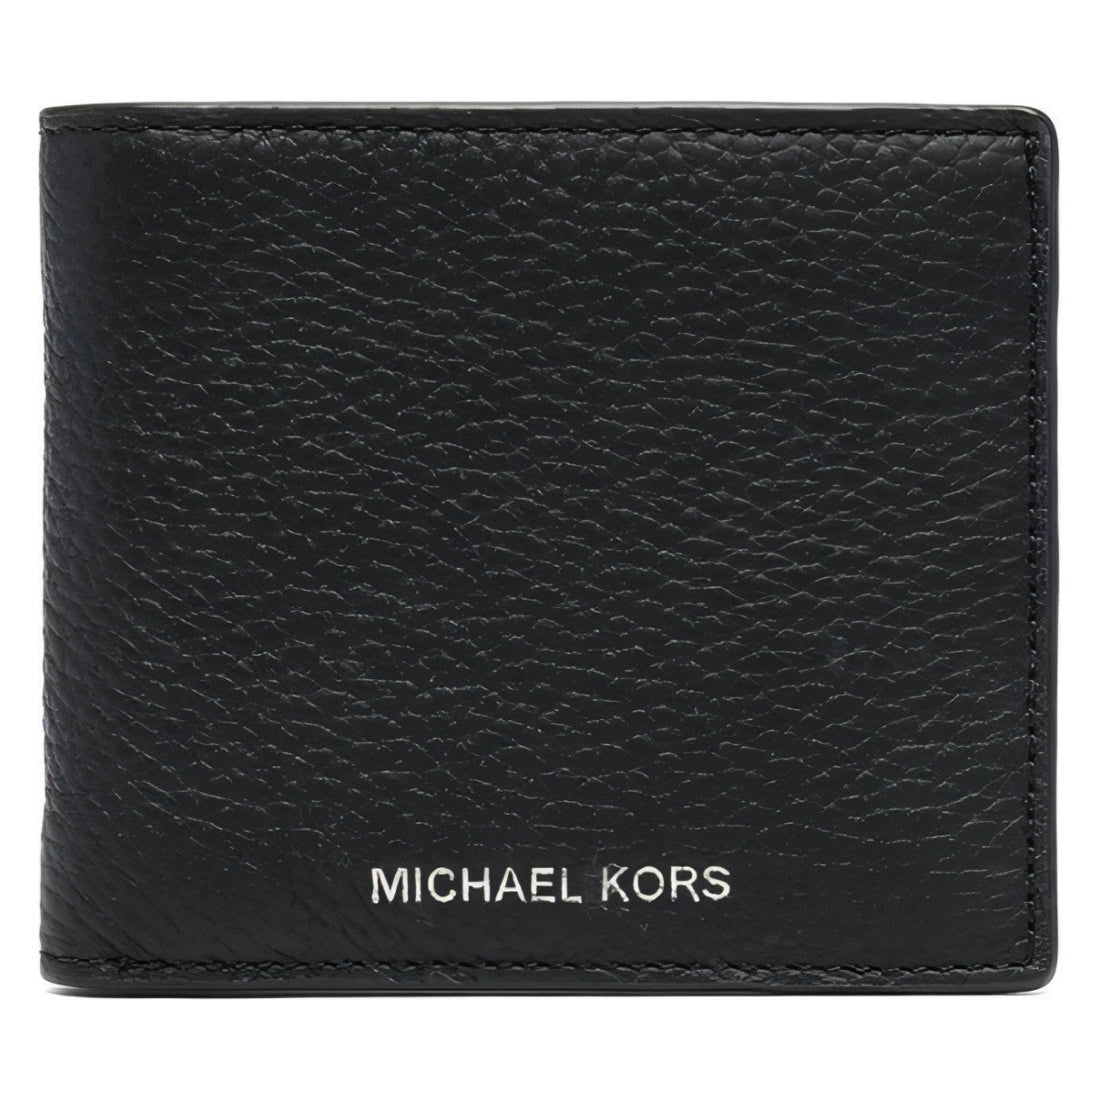 Michael Kors mens black billfold wallet | Vilbury London